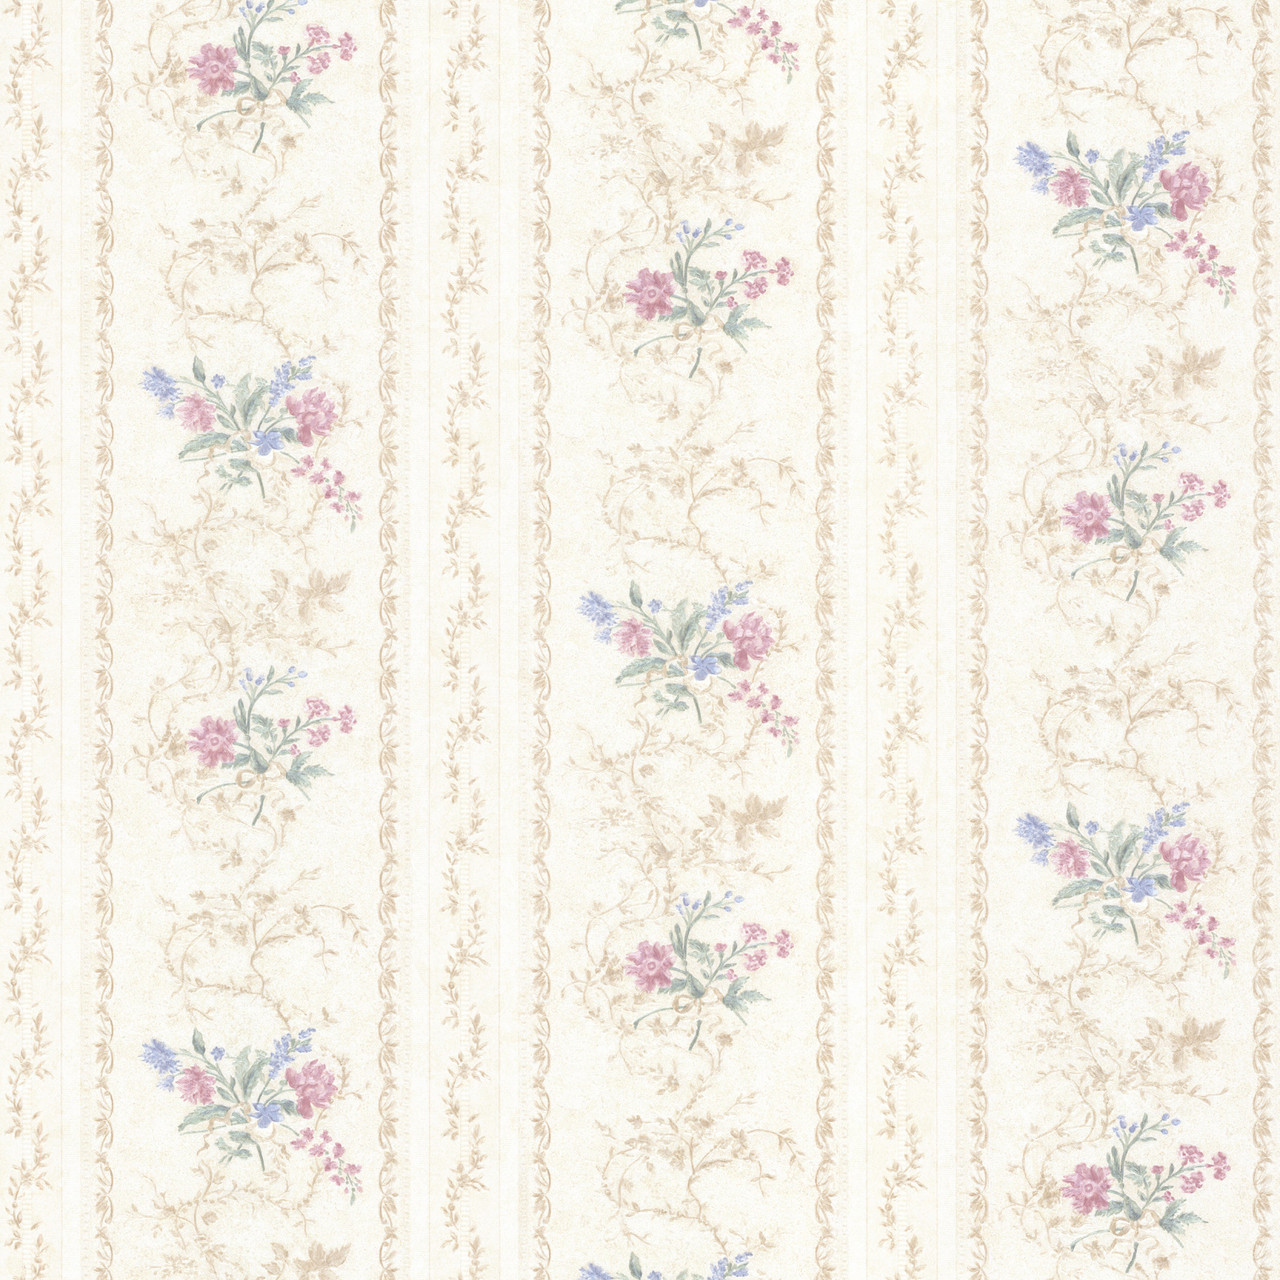 992-68335-Maury Pink Floral Bouquet Stripe wallpaper - indoorwallpaper.com